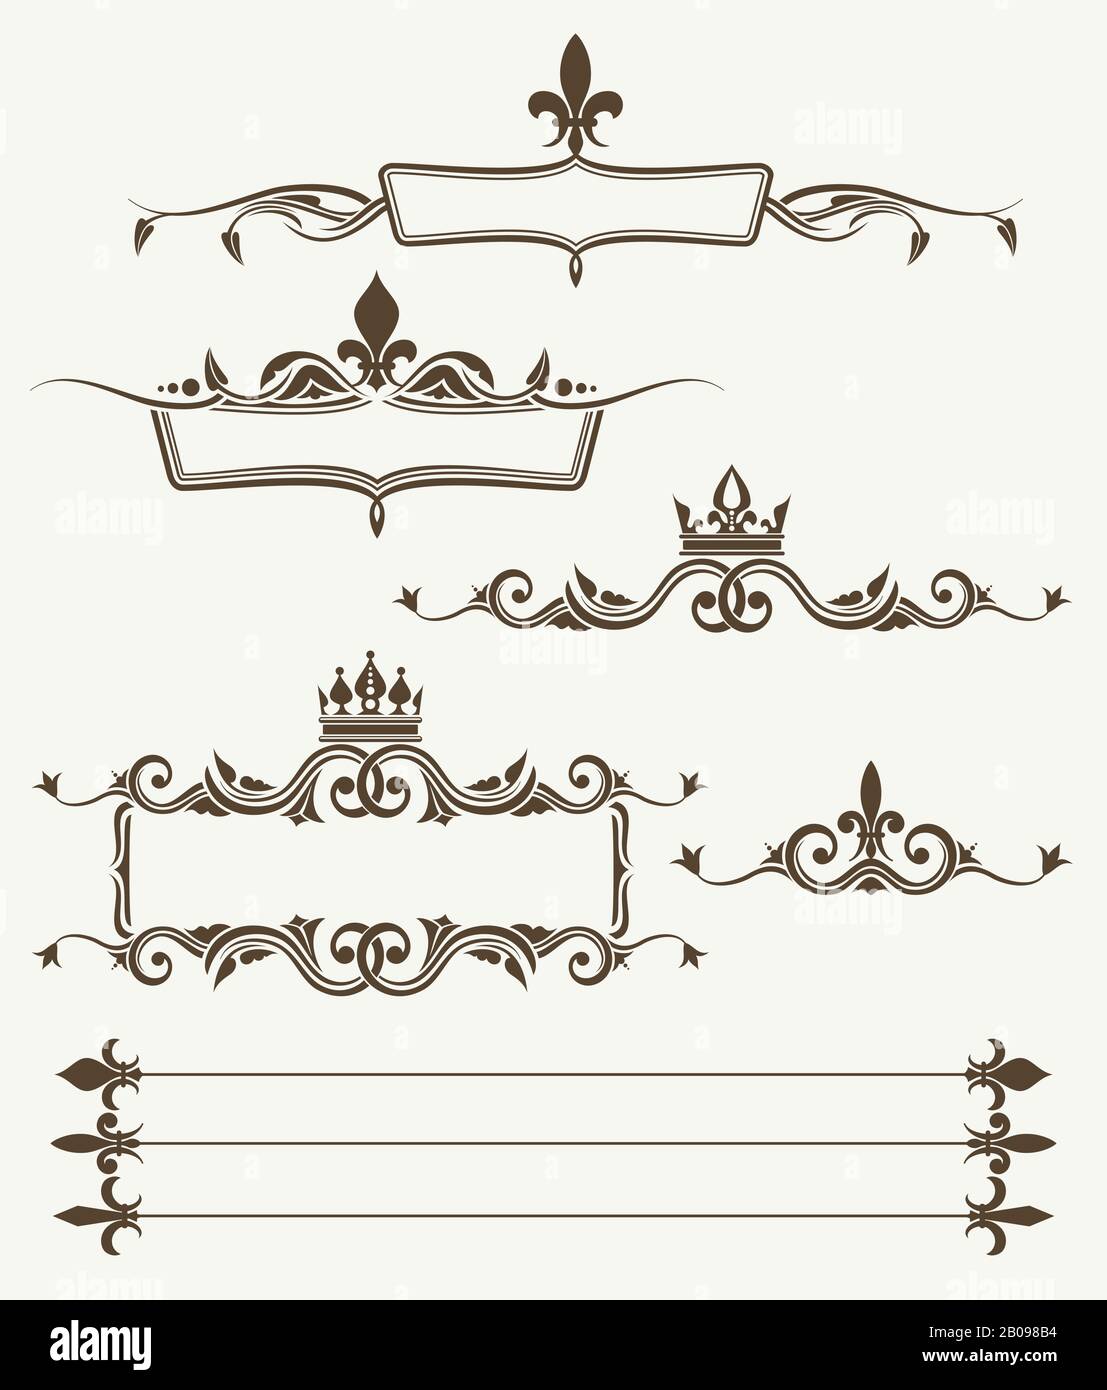 Royal crowns and fleur de lys ornate frames. Elements for decoration design. Vector illustration Stock Vector